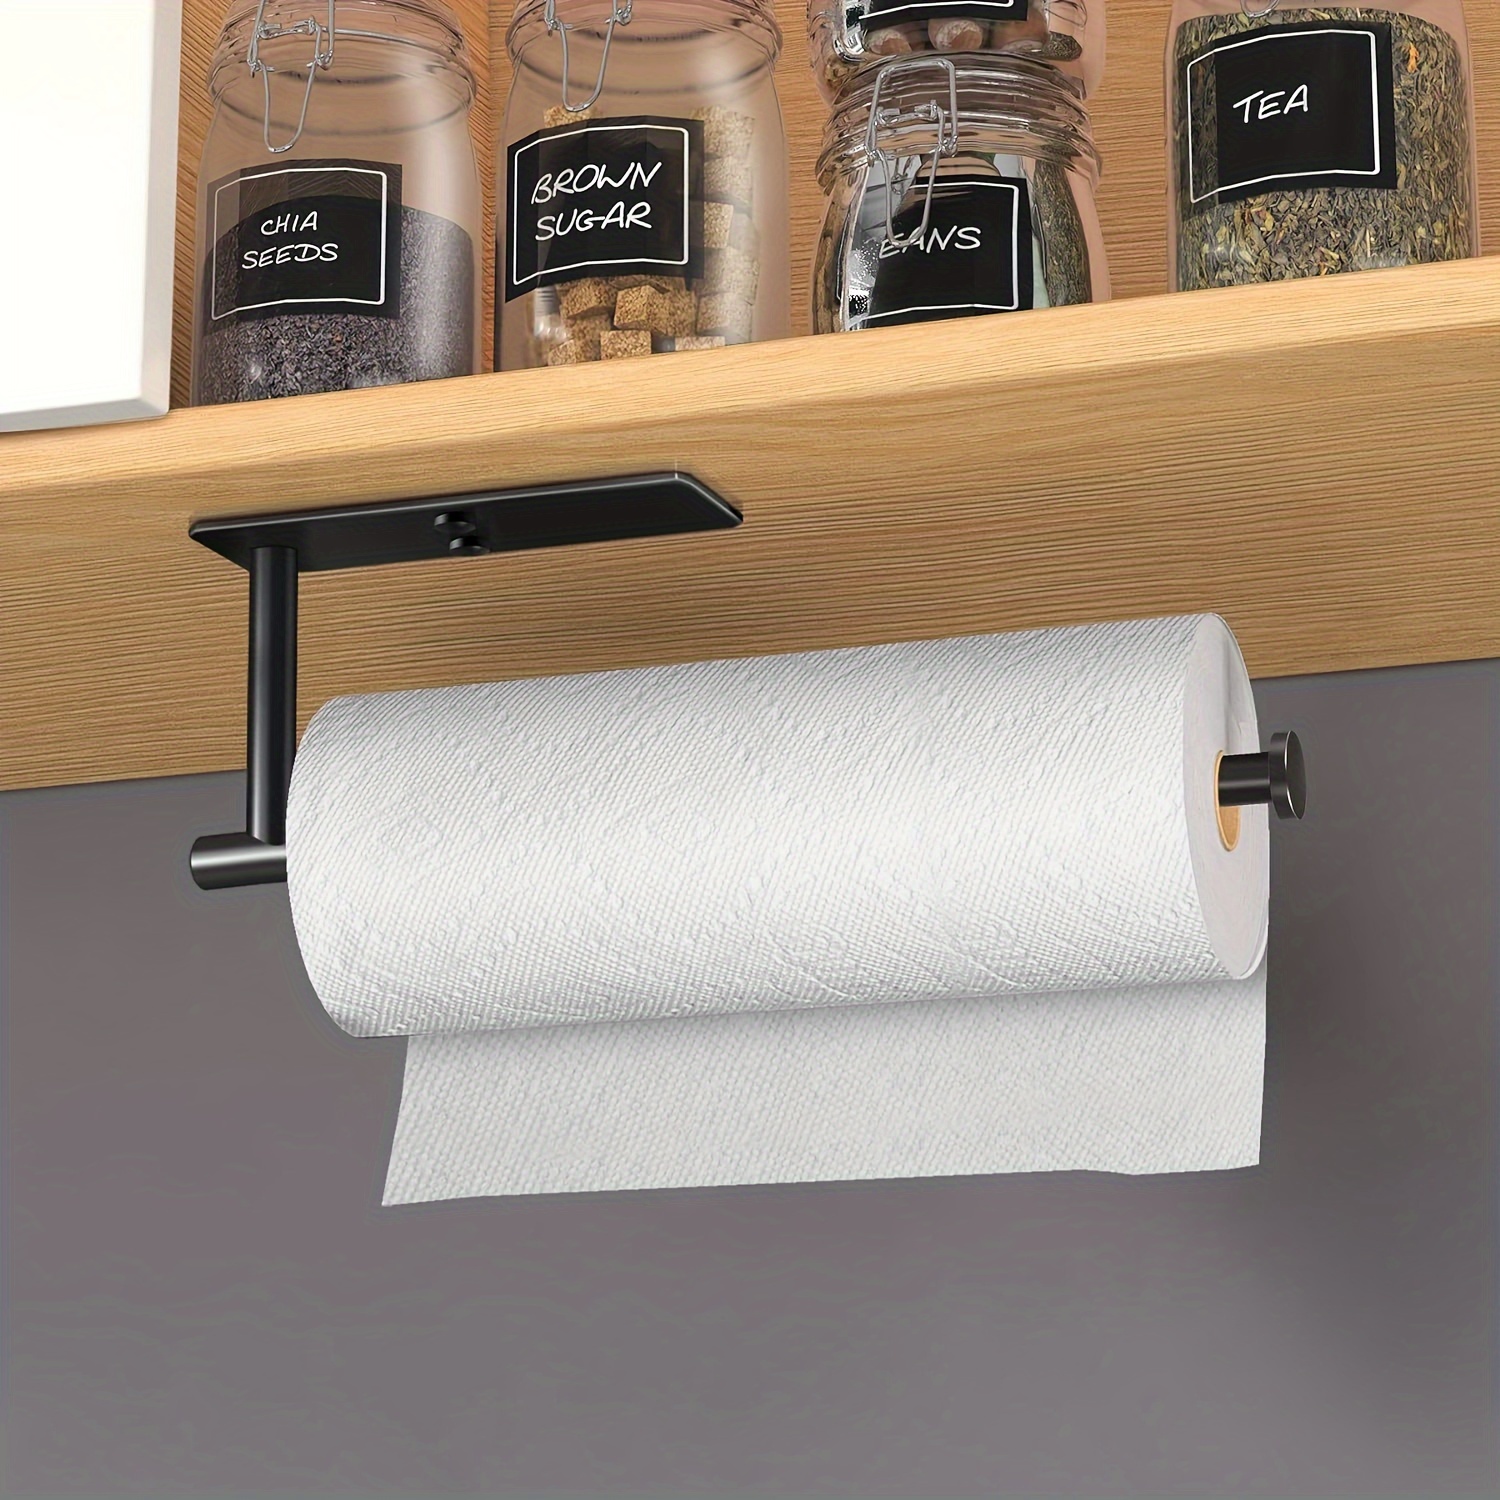 Paper Towel Holder, Self Adhesive Paper Towel Holder Wall Mount